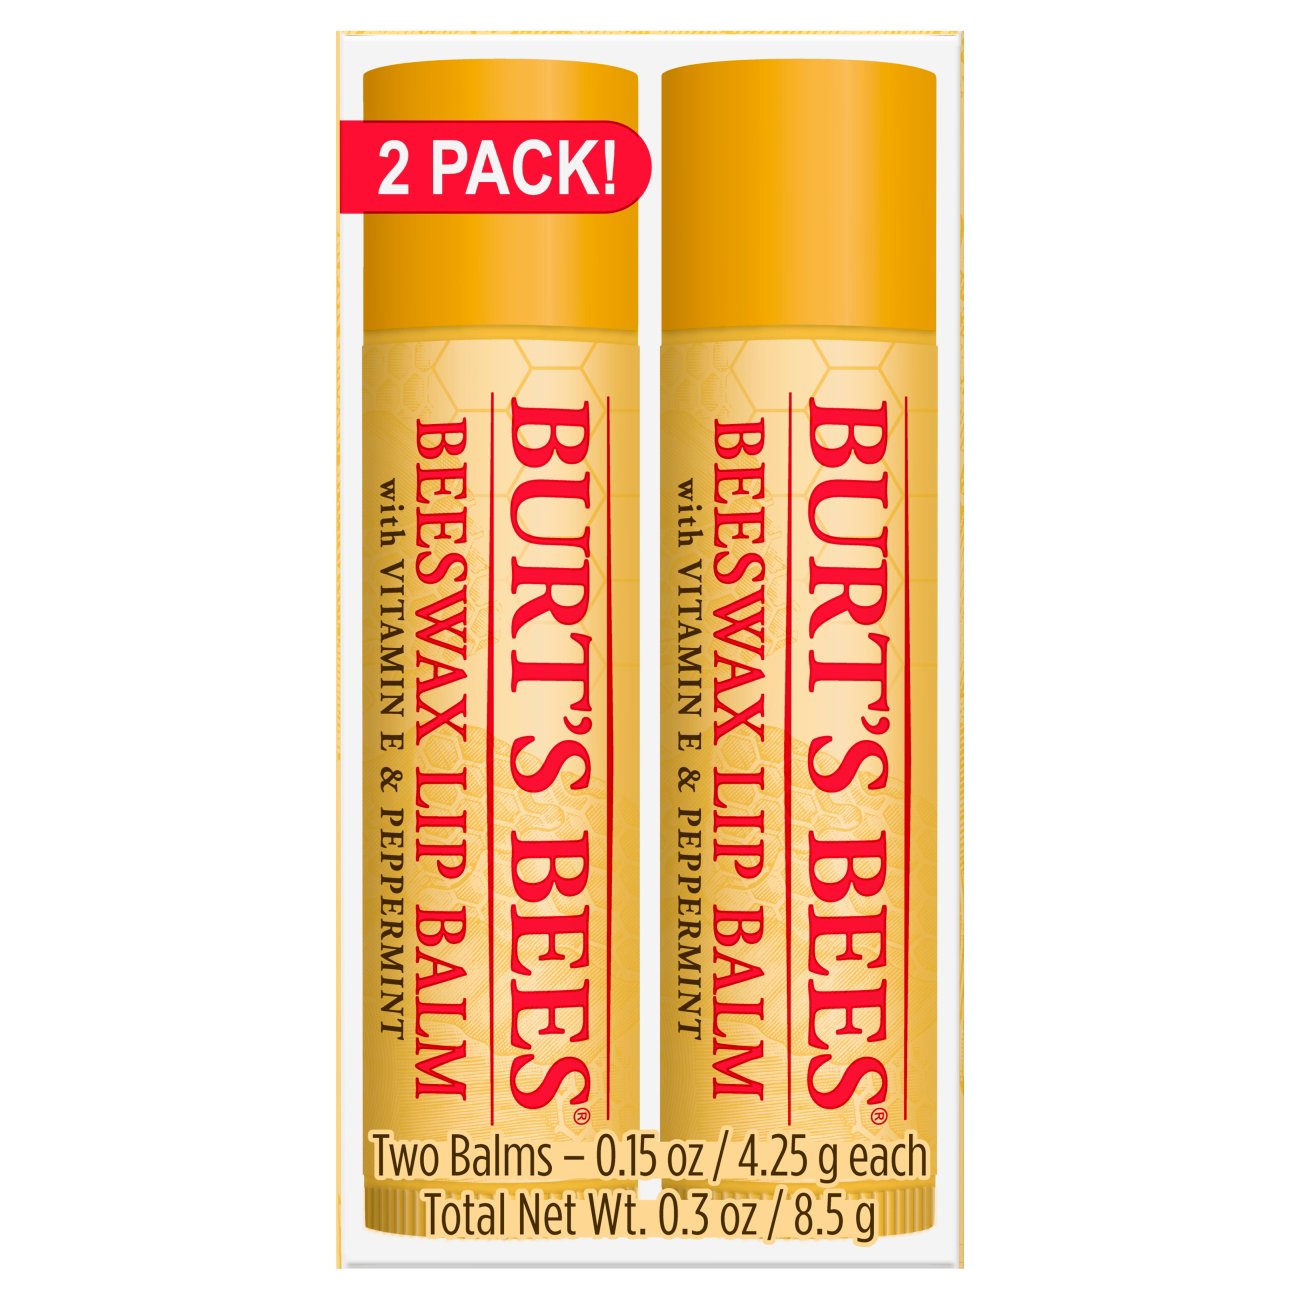 Burt's Bees Beeswax Lip Balm - Shop Medicines & Treatments at H-E-B